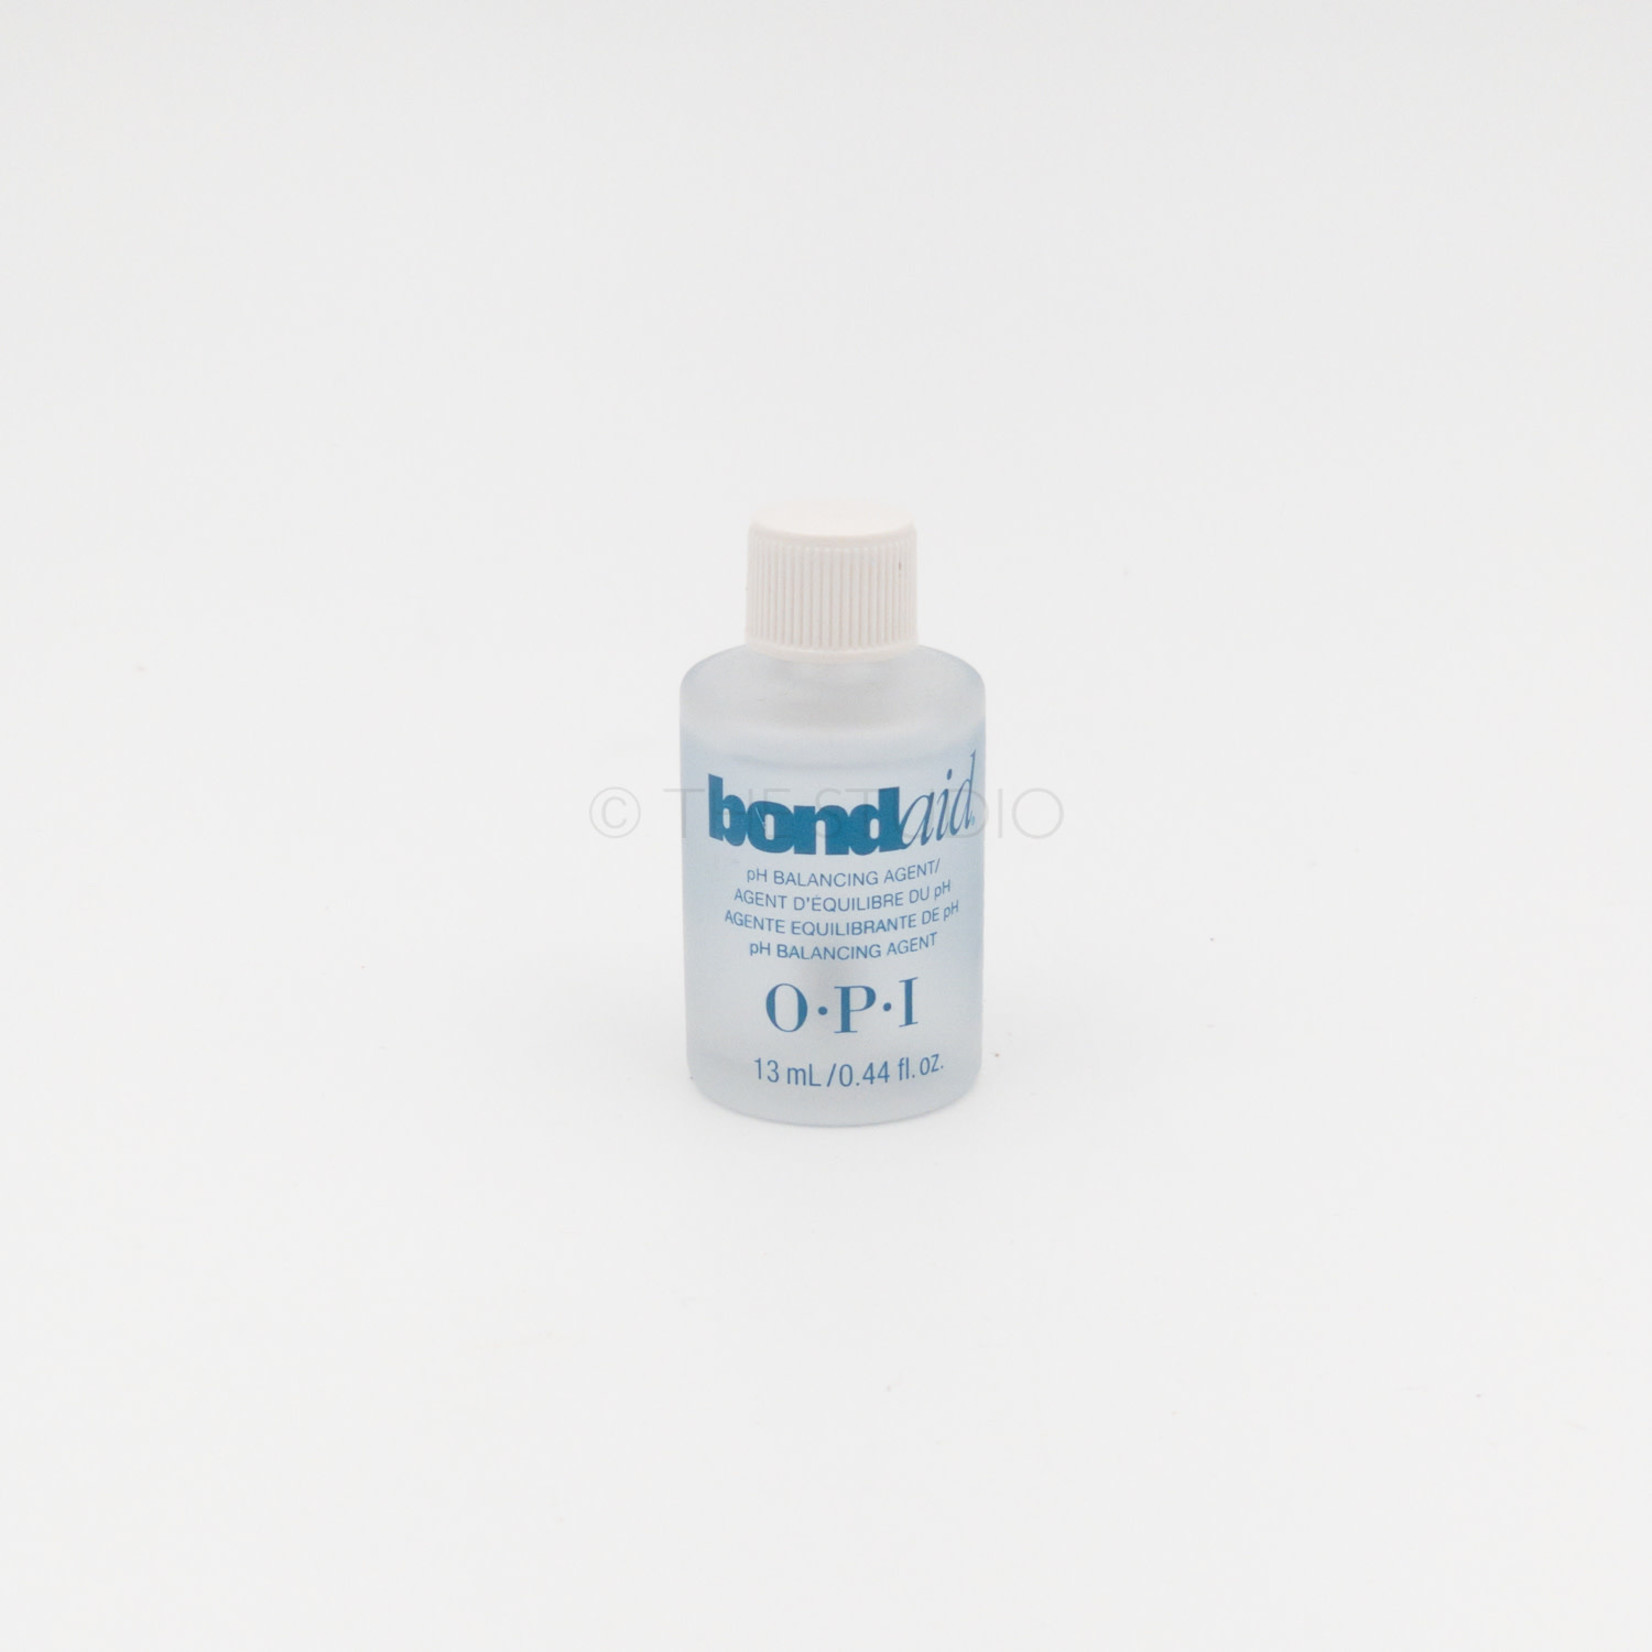 OPI OPI - Bond Aid - pH Balancing Agent